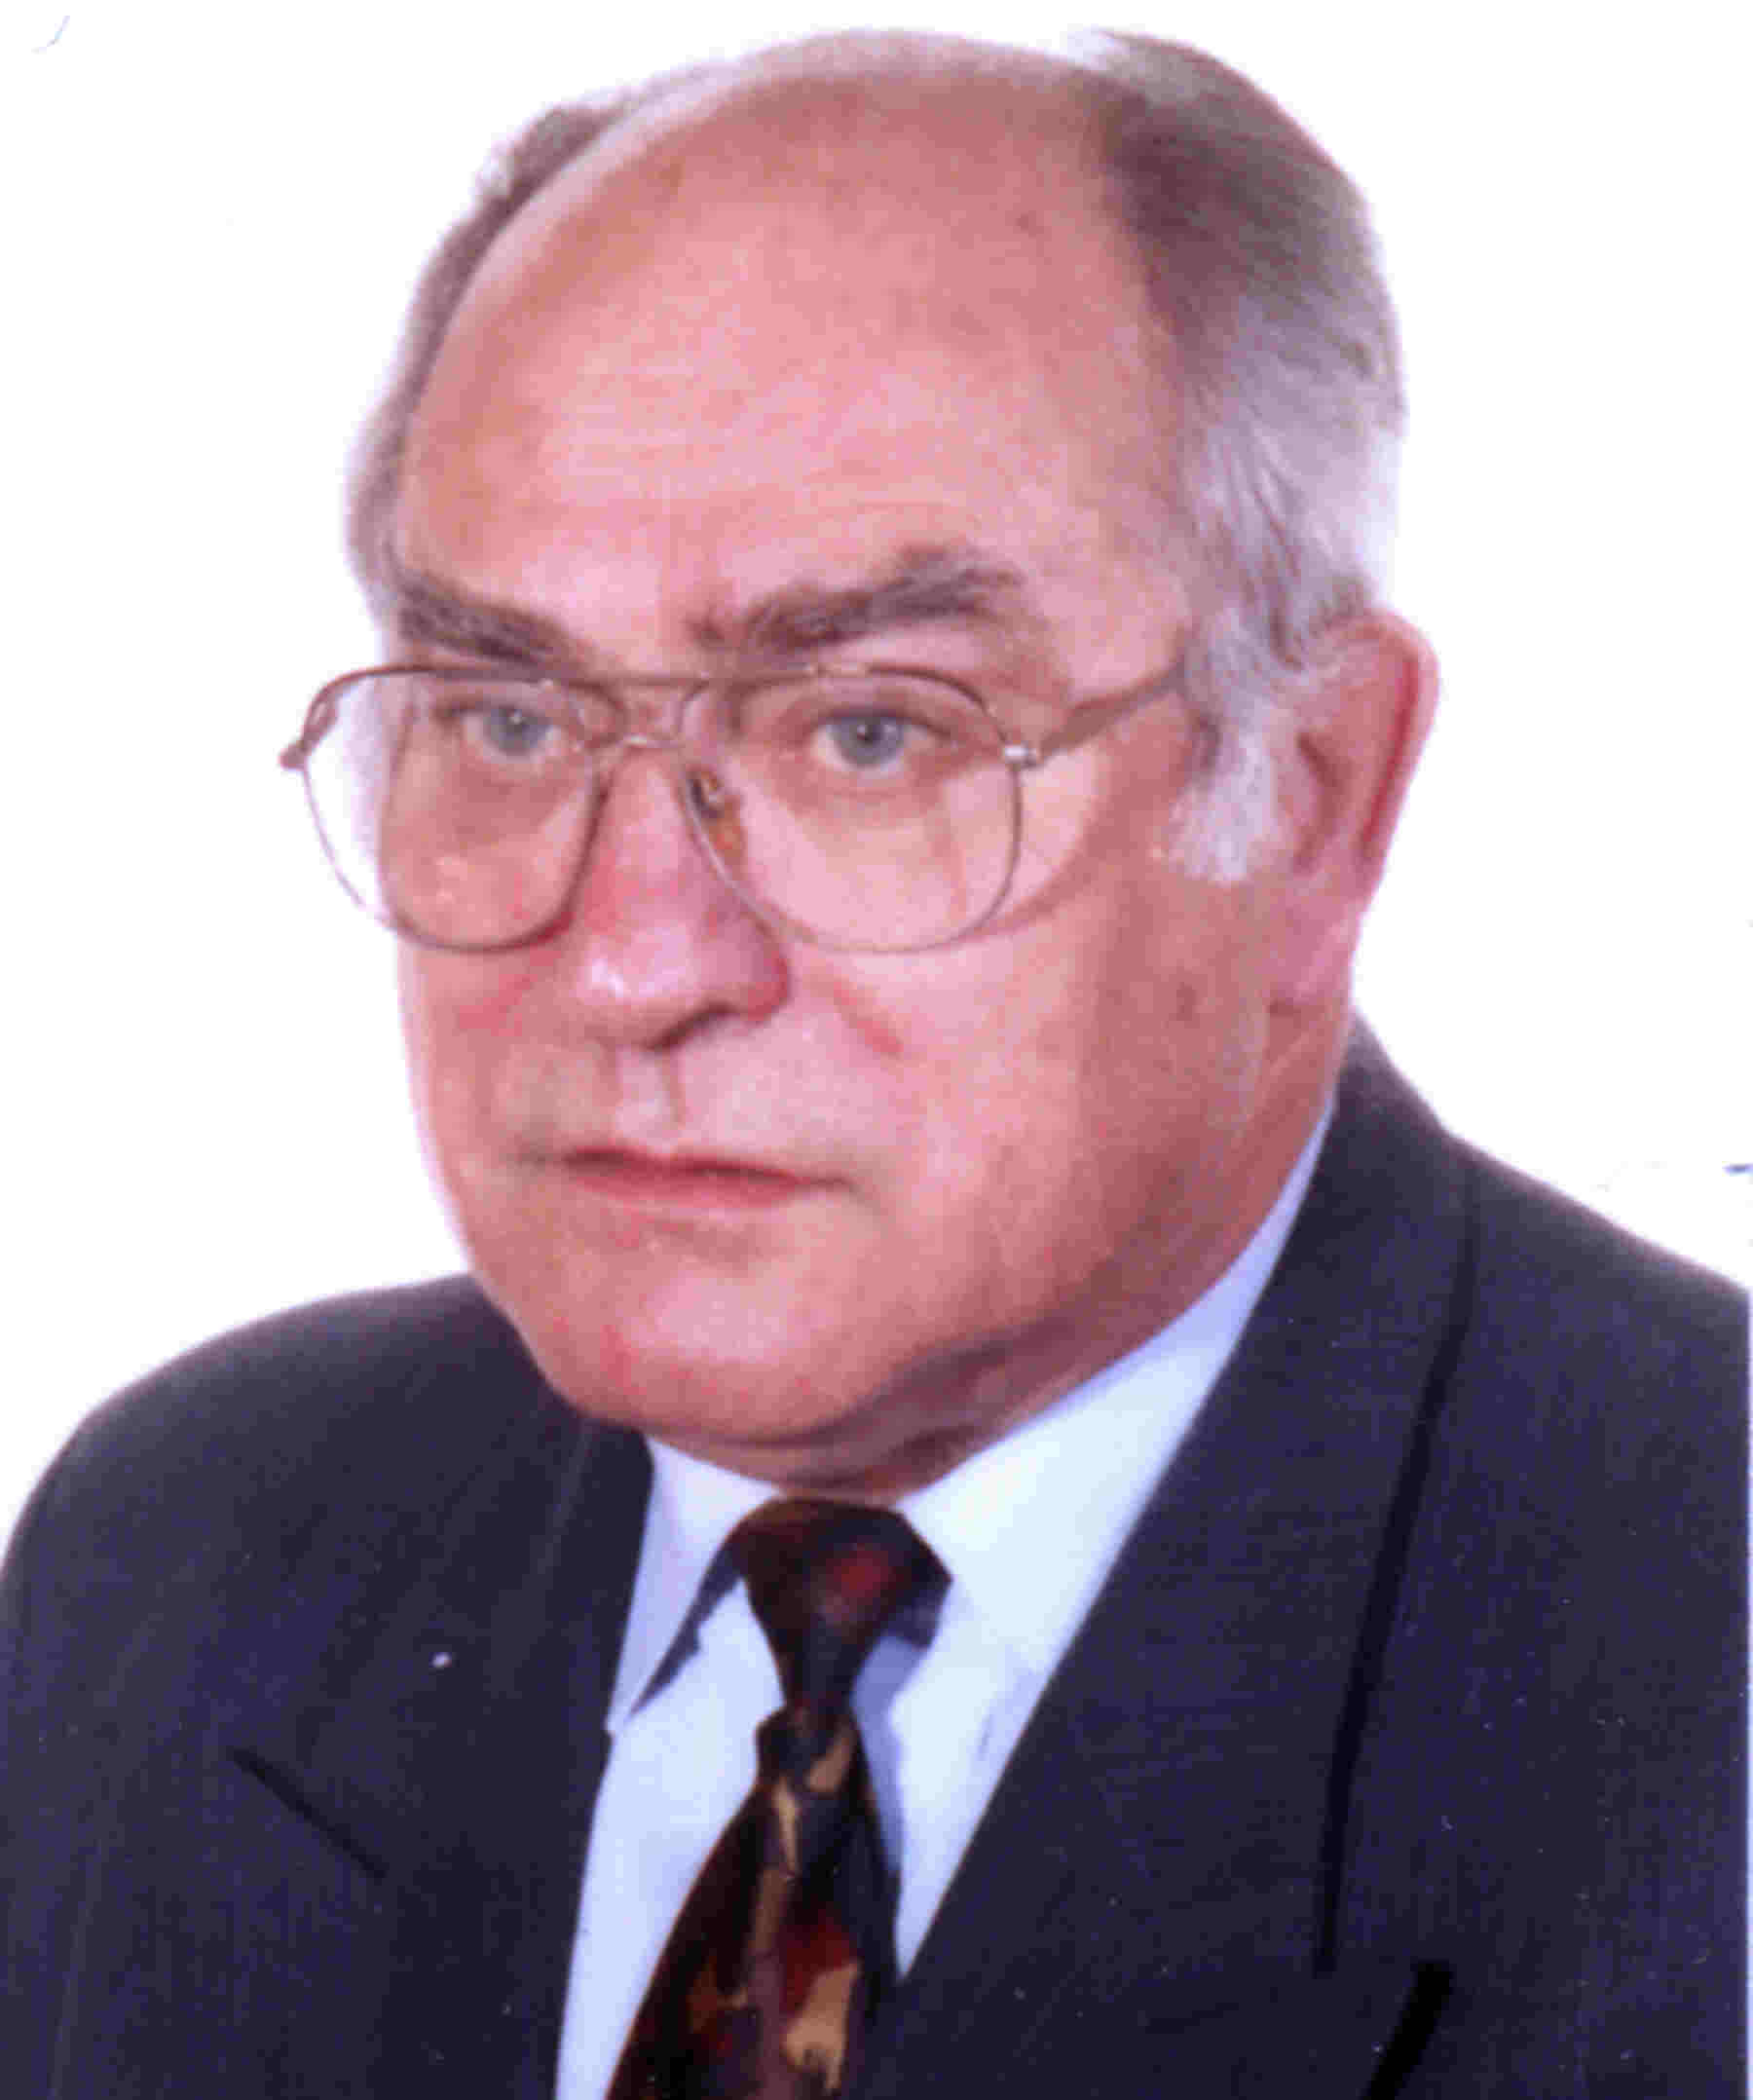 Jan Barszcz